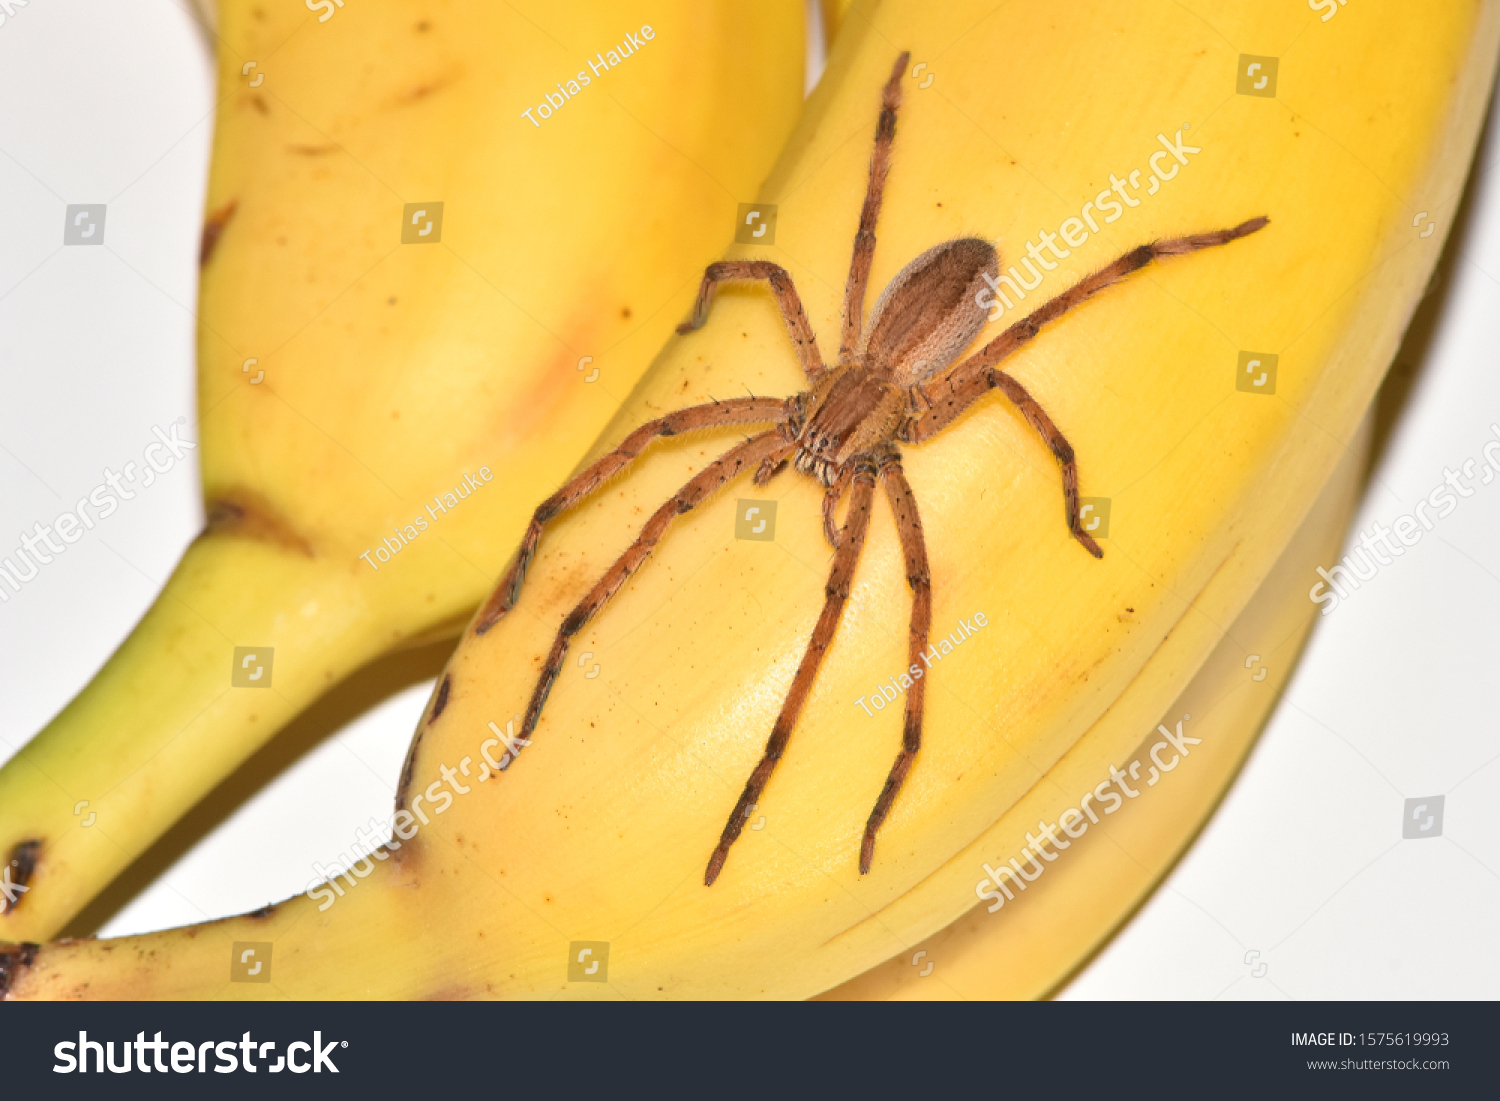 Wandering Spider Cupiennius Getazi On Banana の写真素材 今すぐ編集